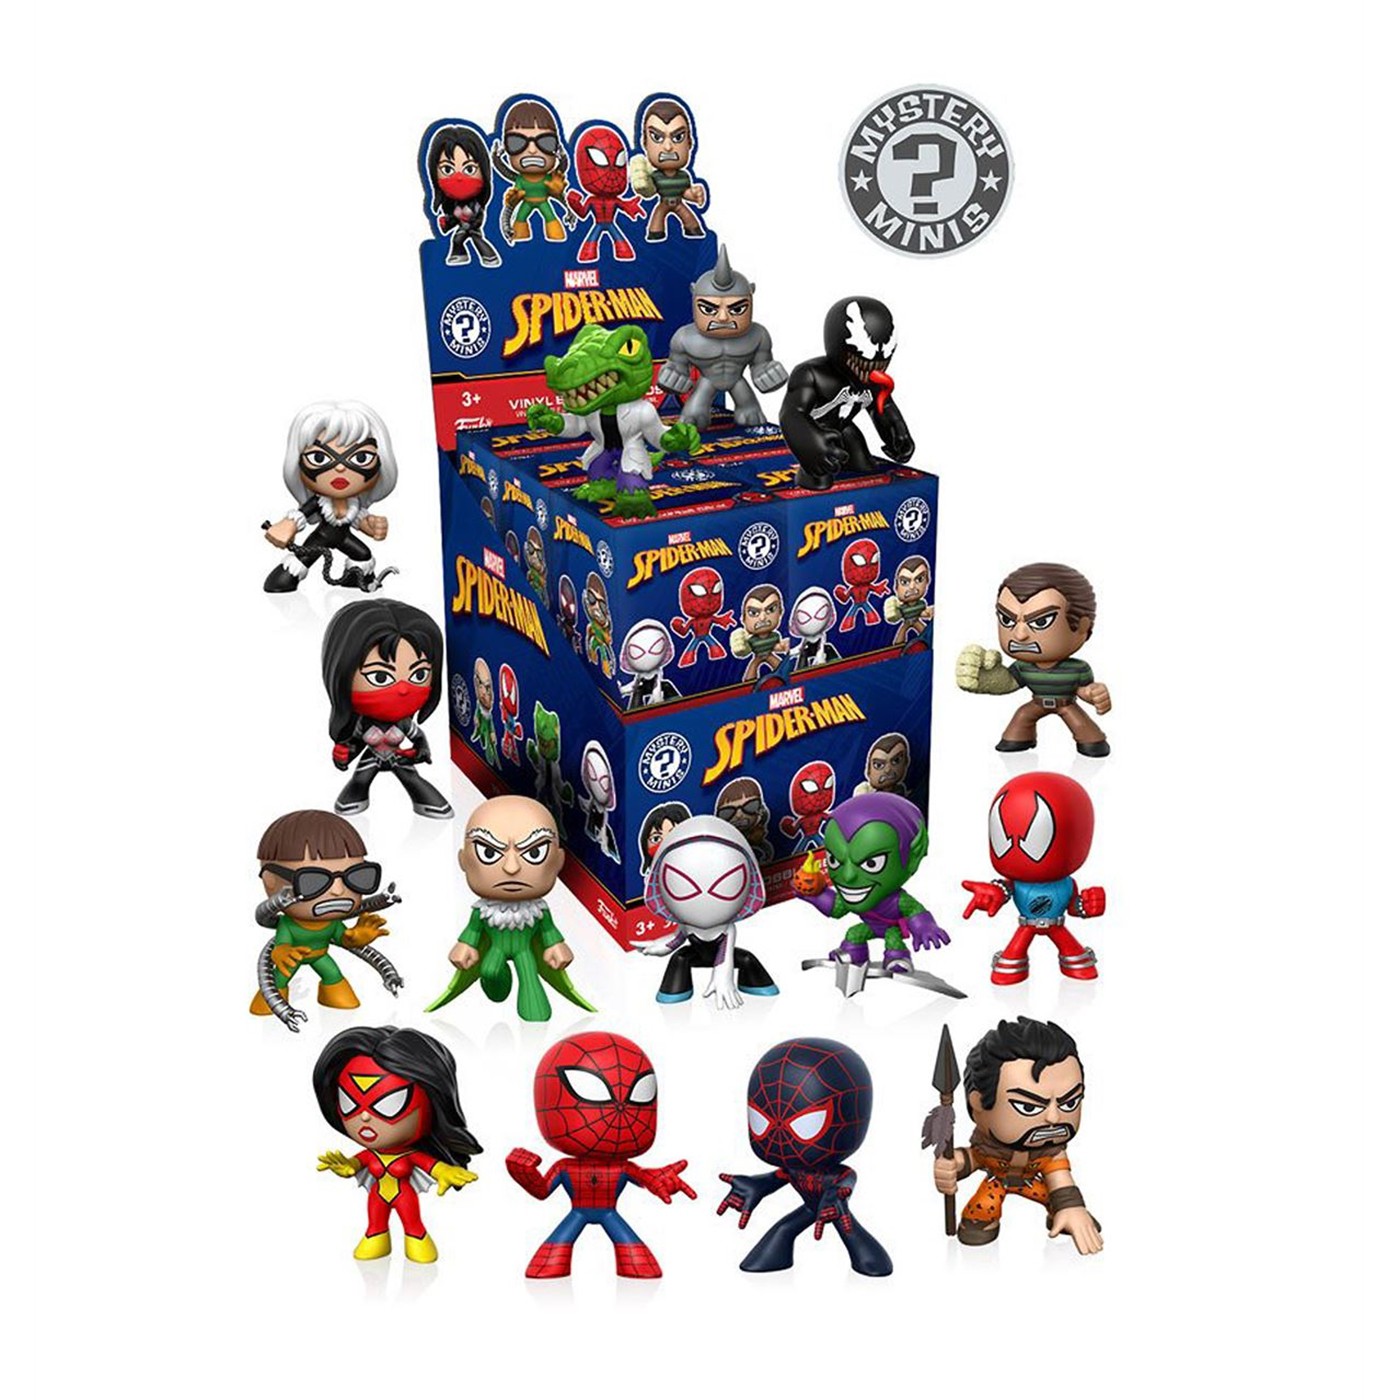 Spider-Man Classic Funko Mystery Minis Figure